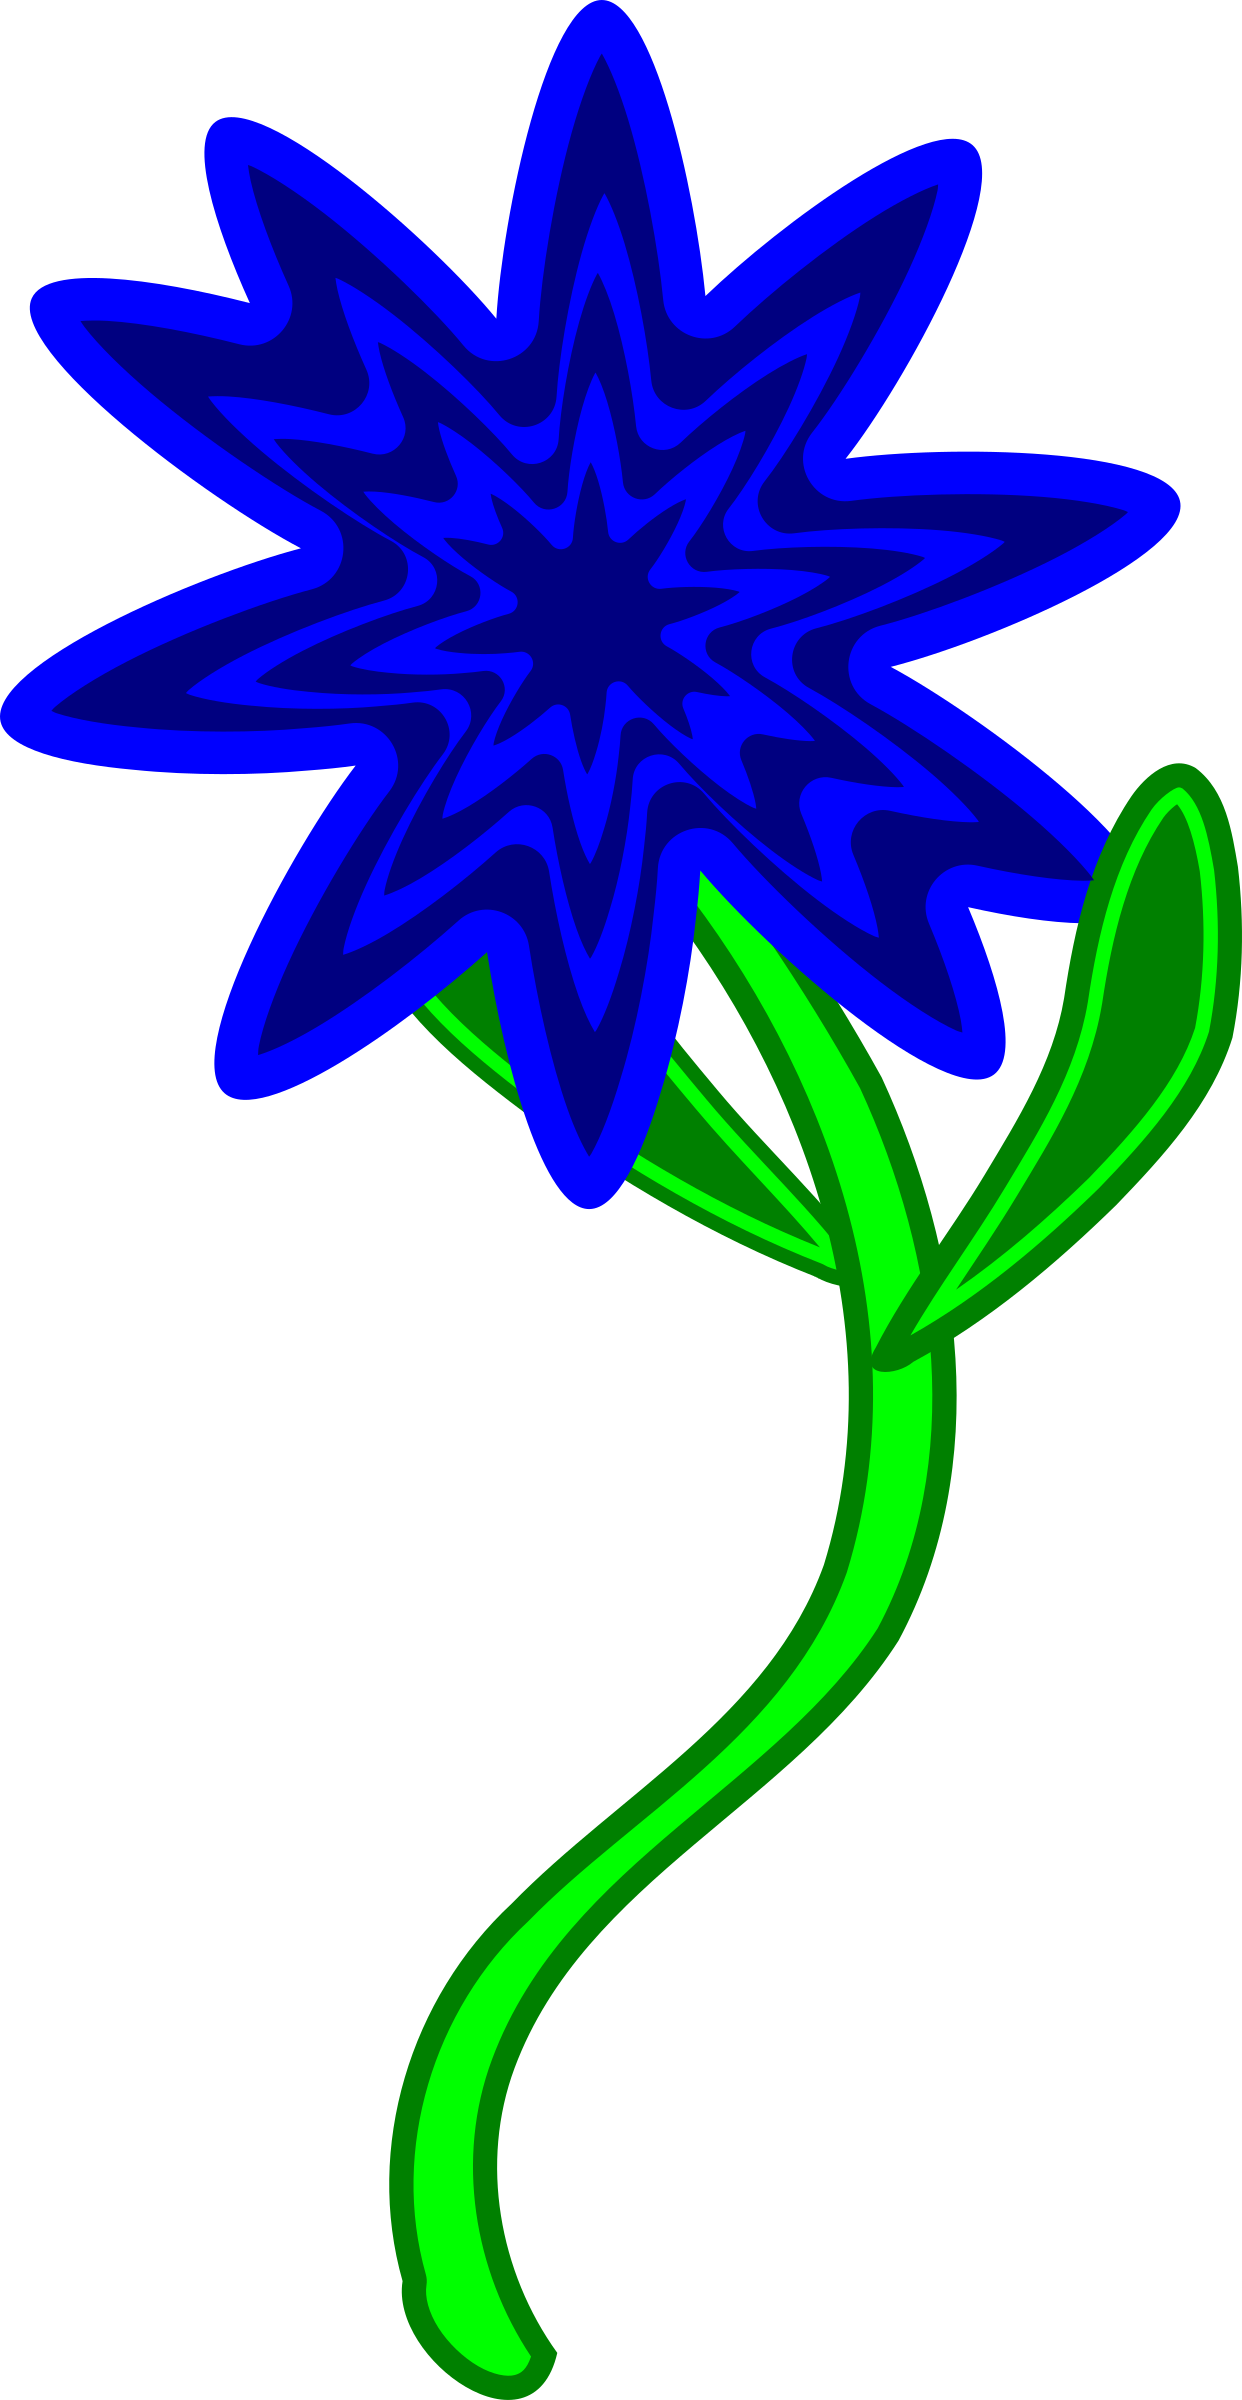 Triptastic Blue Flower By Semjaza